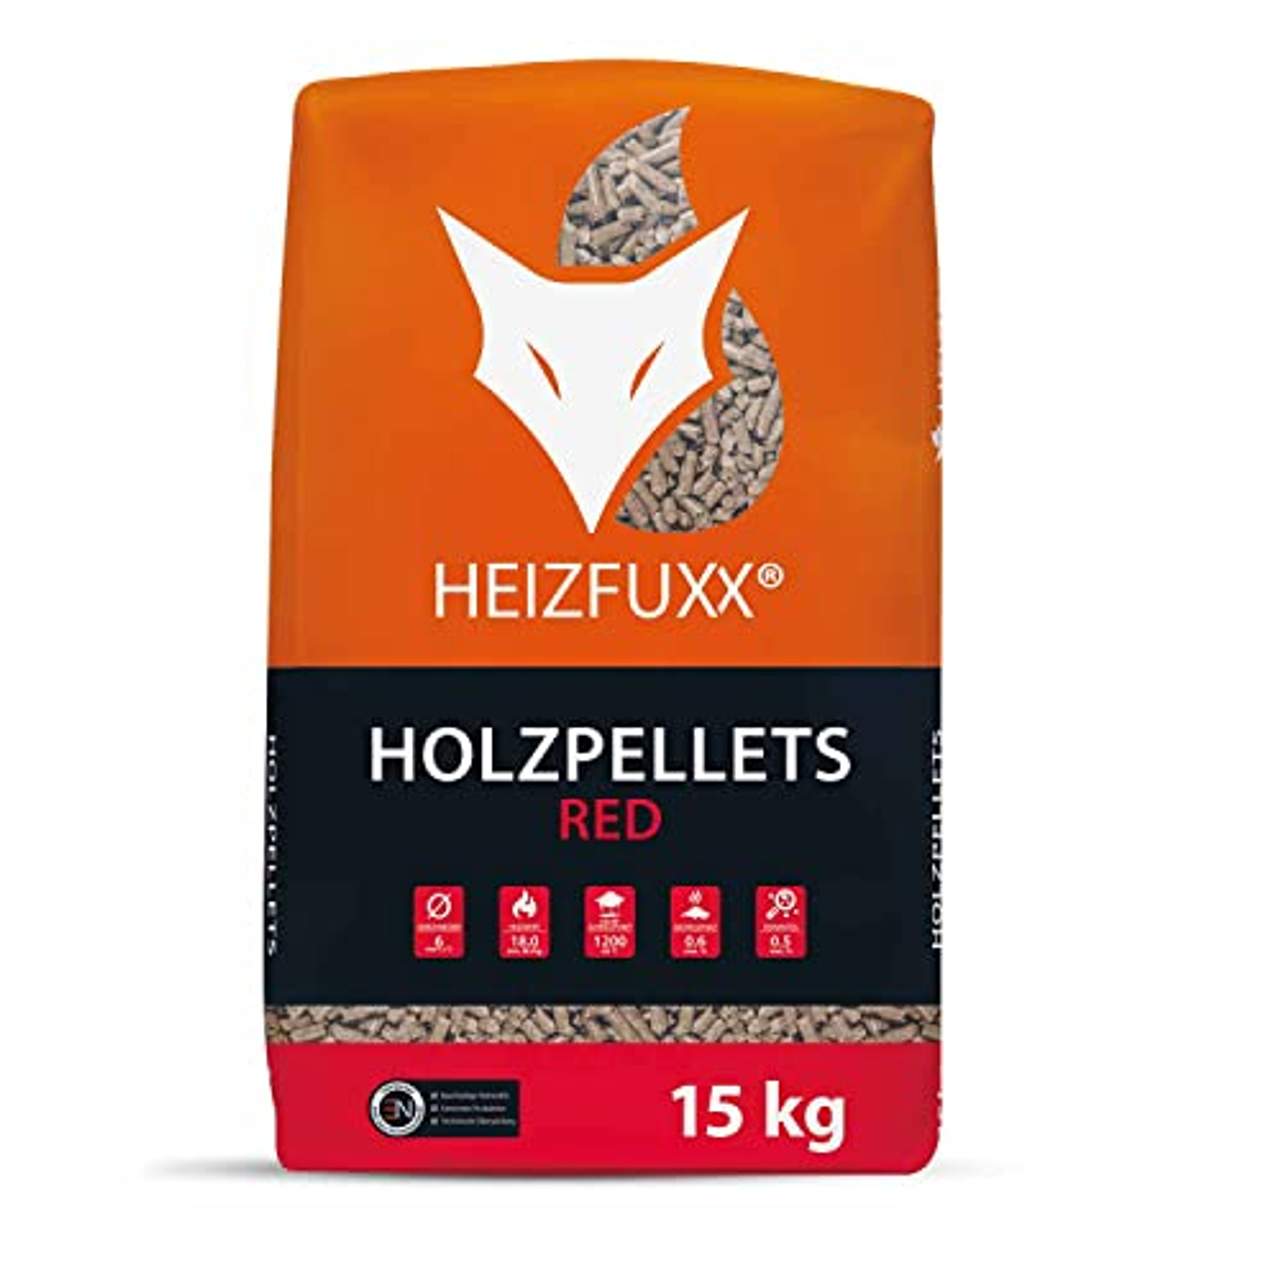 HEIZFUXX Holzpellets Red Heizpellets Hartholz 975kg Pellet Öko Energie